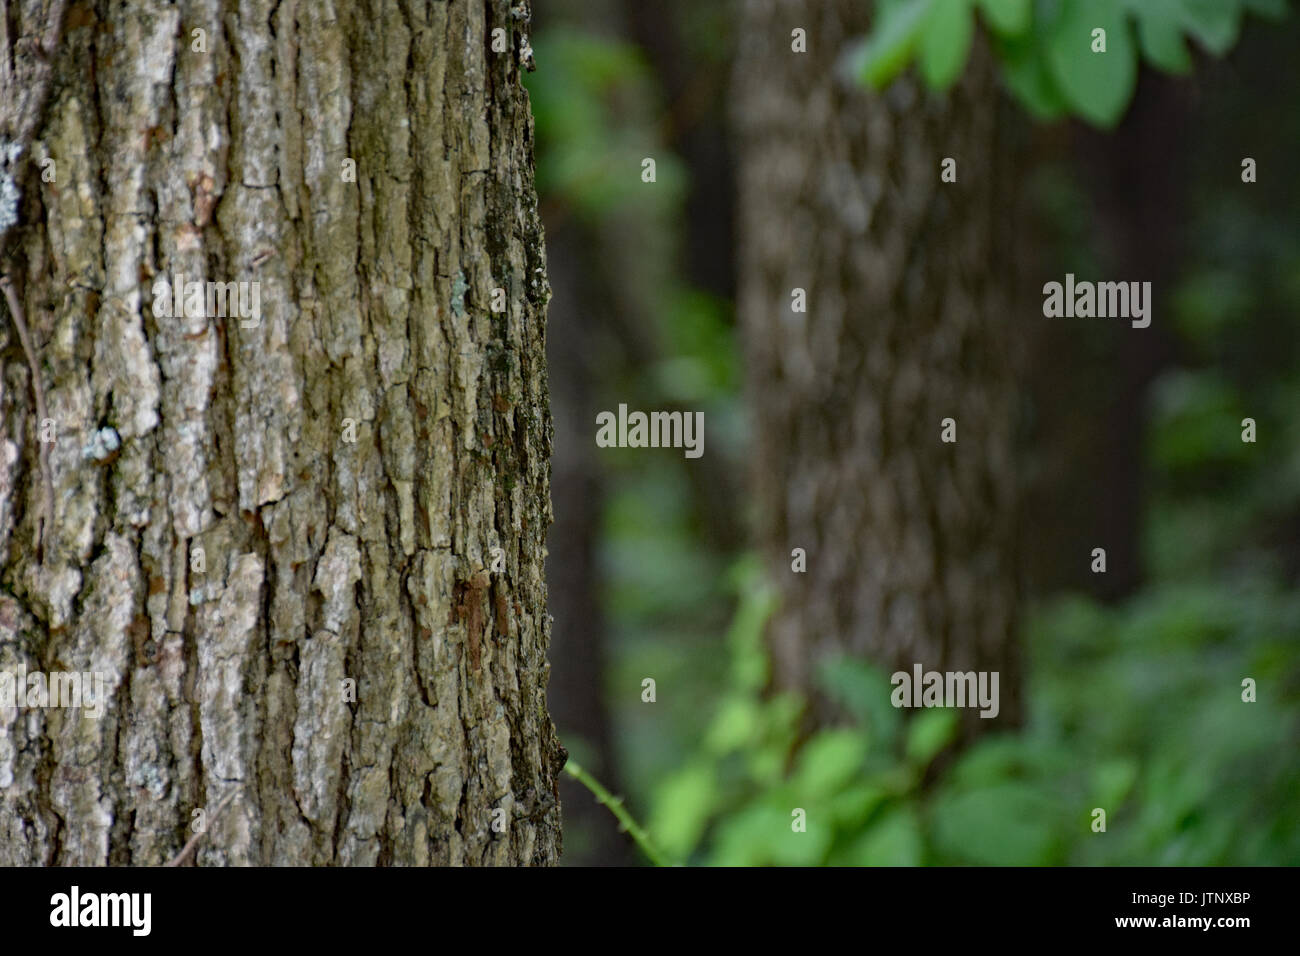 Kentucky Coffee Tree Bark Stock Photo